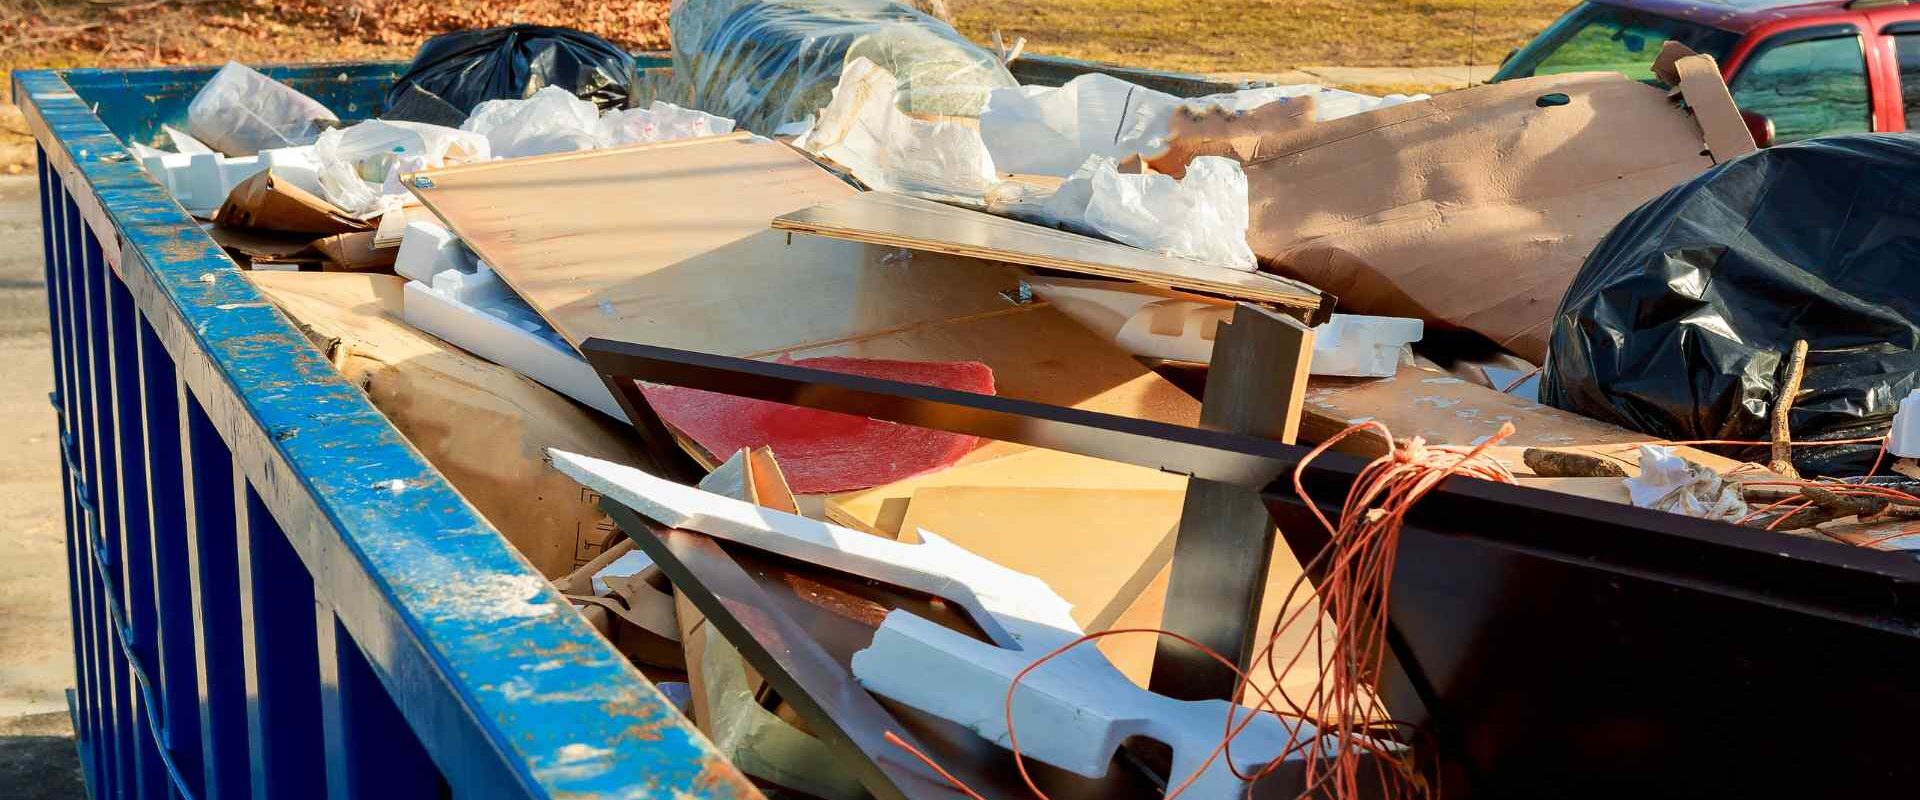 Trash Removal Contractors in Annapolis MD